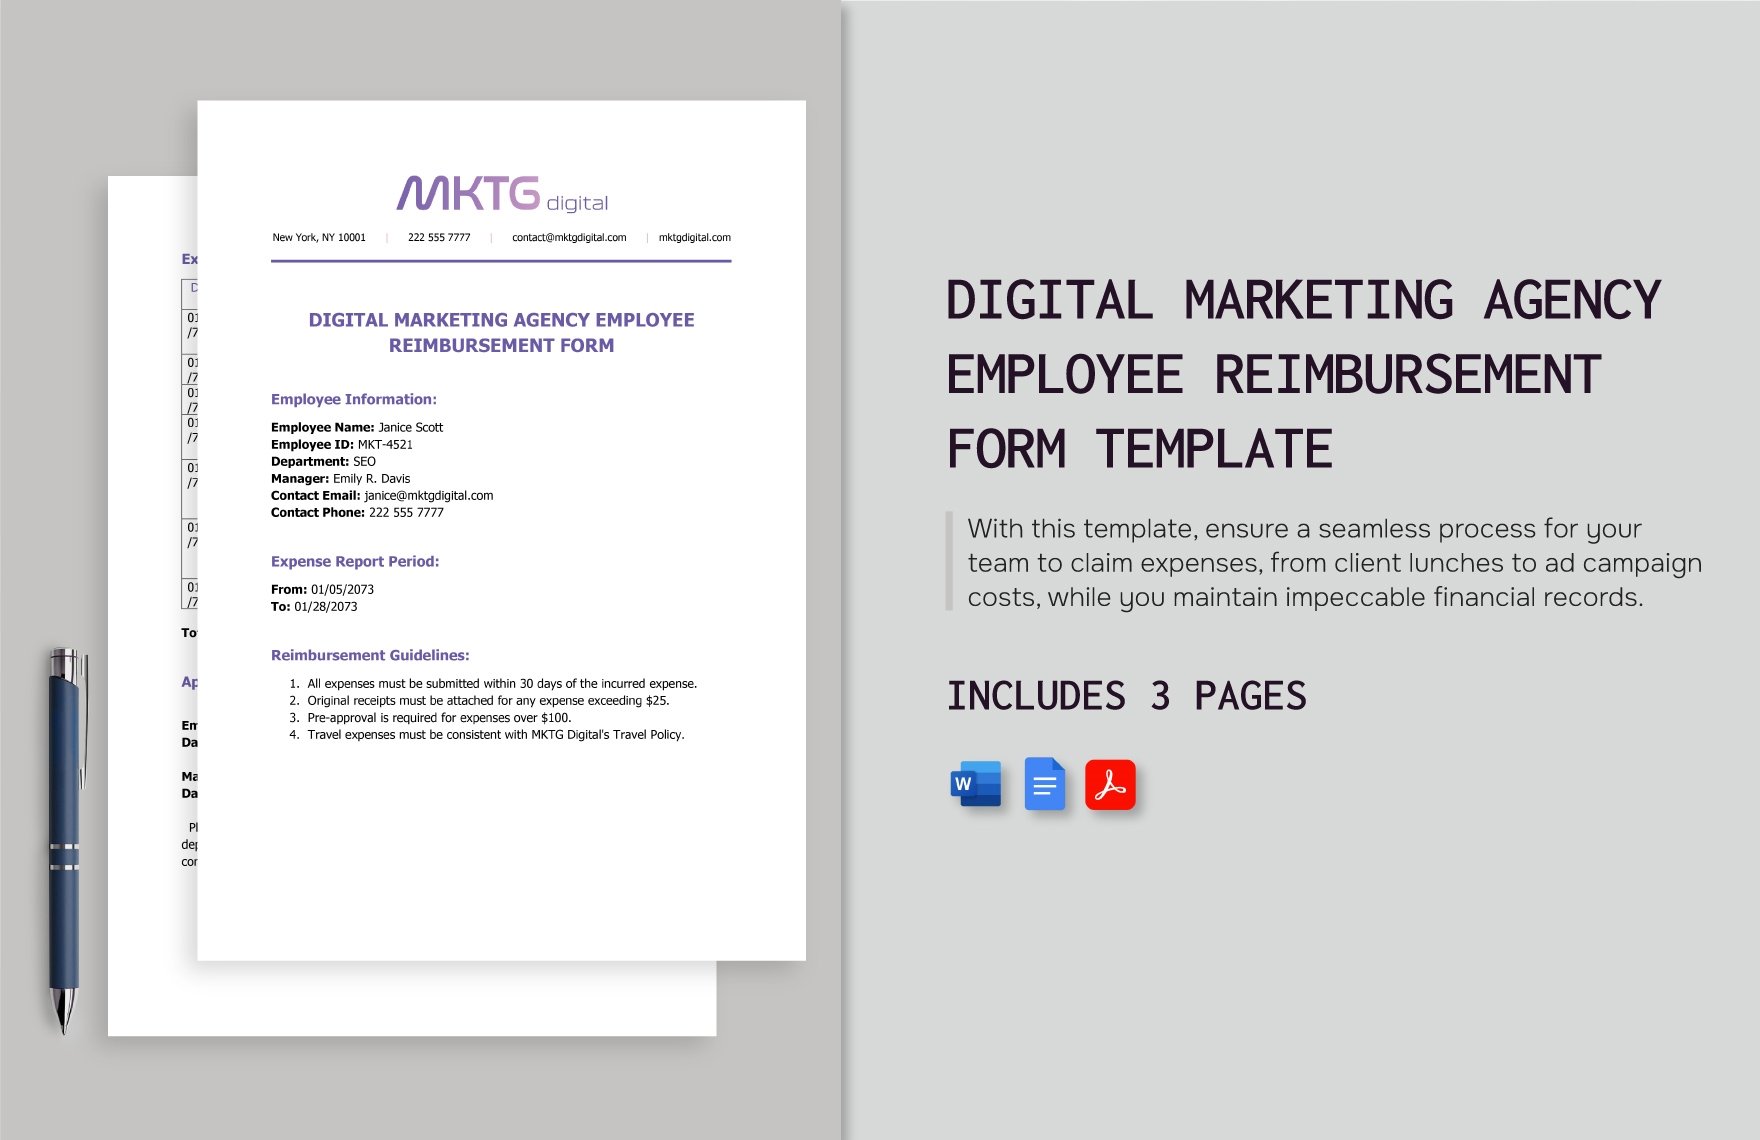 Free Digital Marketing Agency Employee Reimbursement Form Template